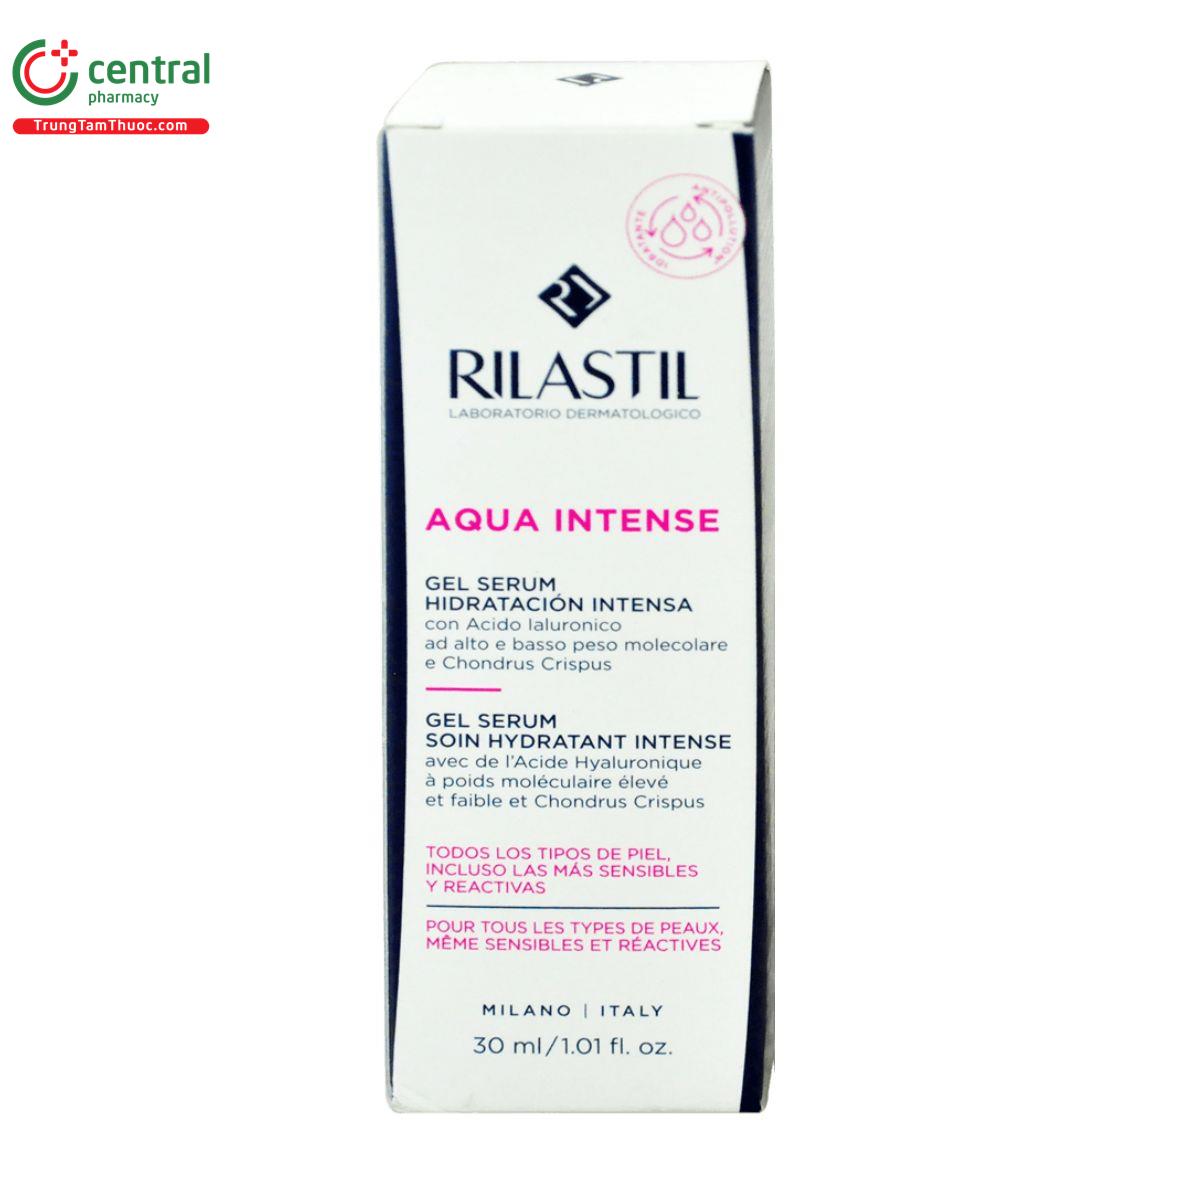 rilastil aqua intense gel serum soin hydratant intense 1 N5682